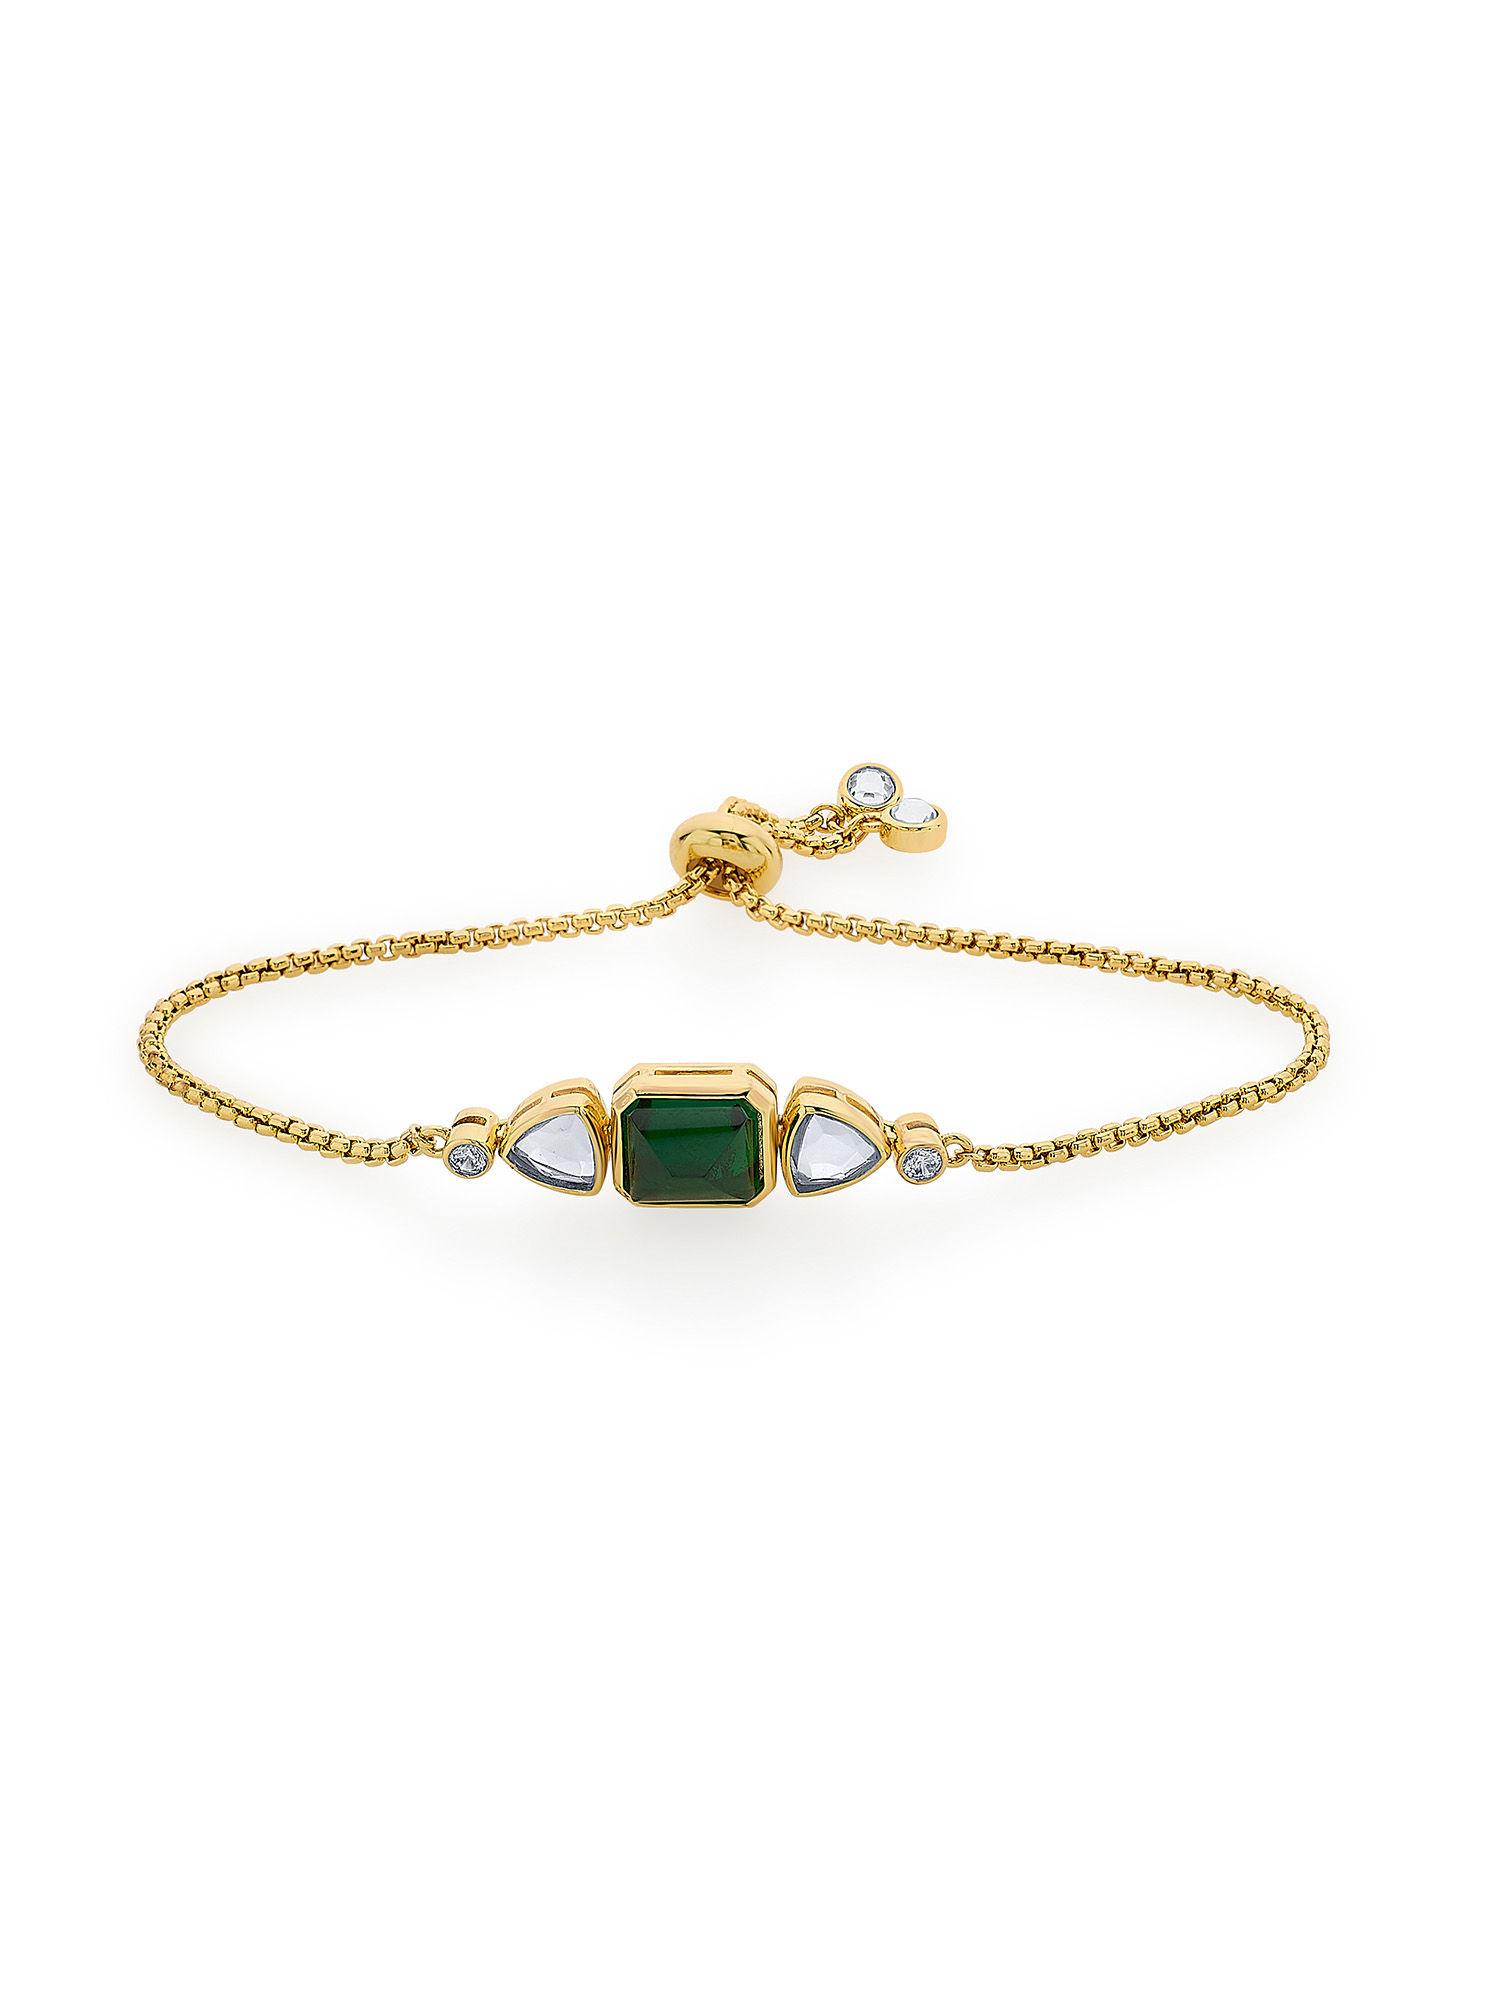 ruhaniyat green hydro & mirror bracelet in 18k gold plated